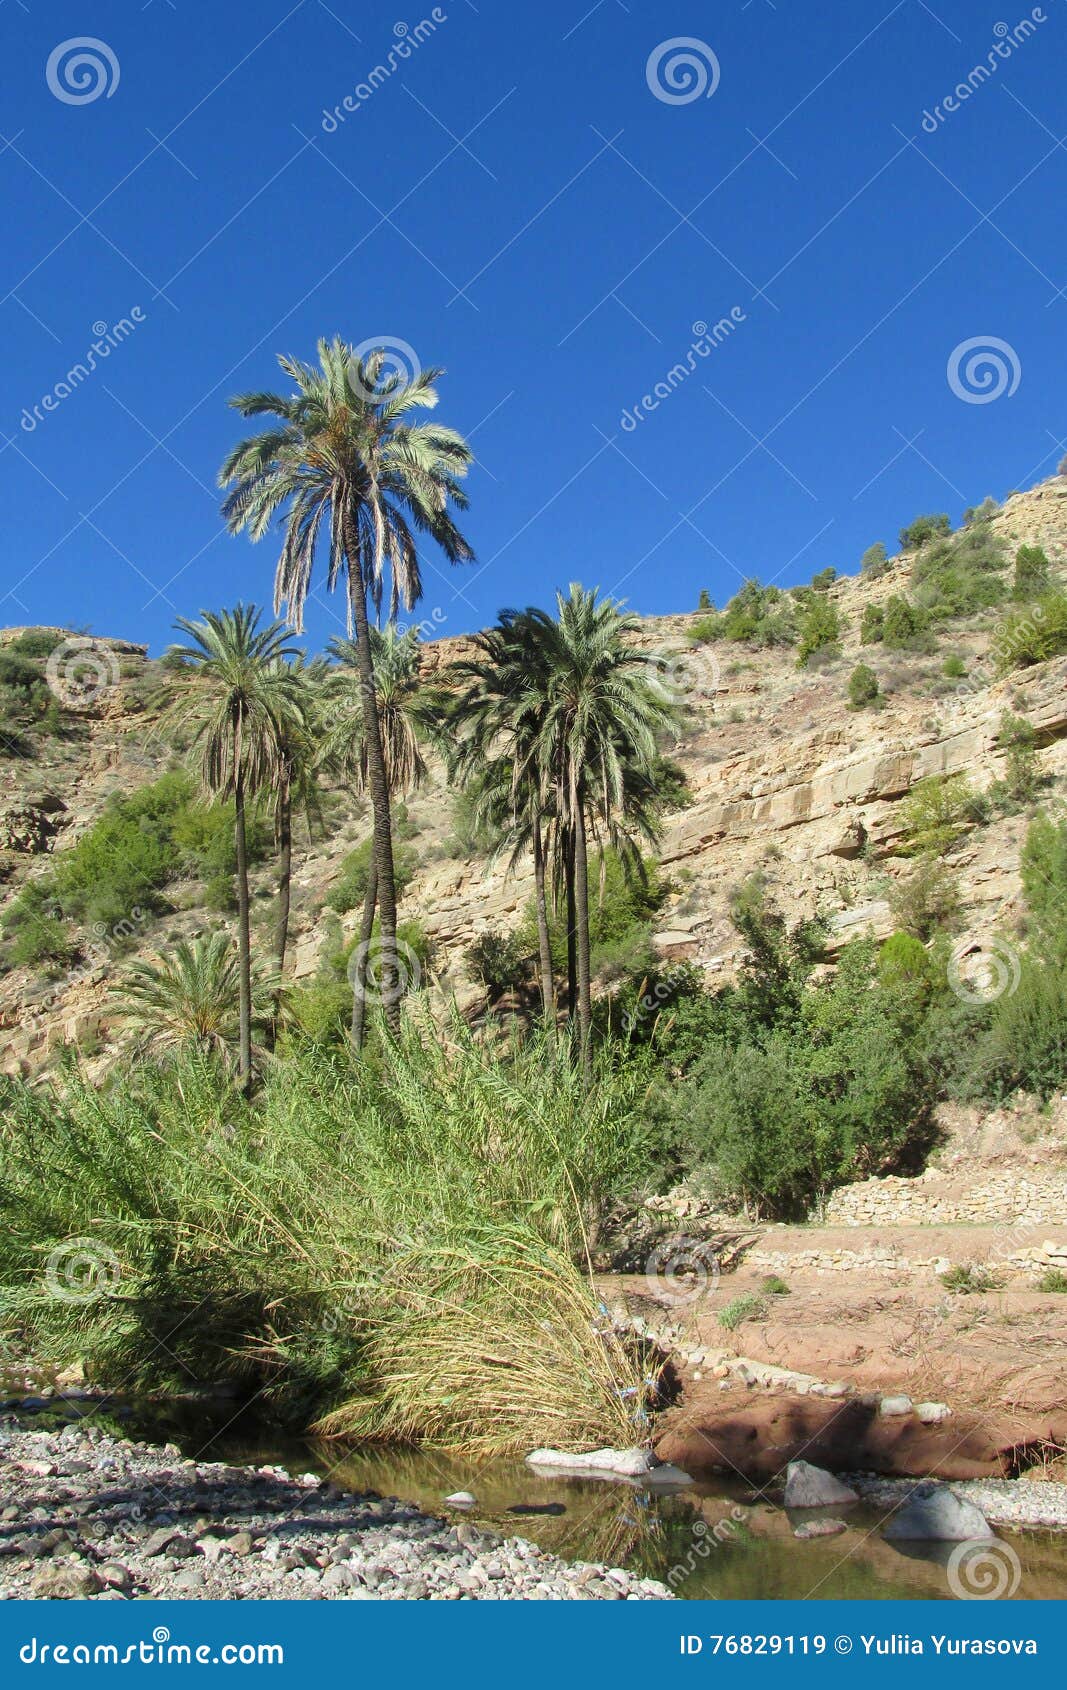 Palm tree near the river stock image. Image of amazon - 76829119